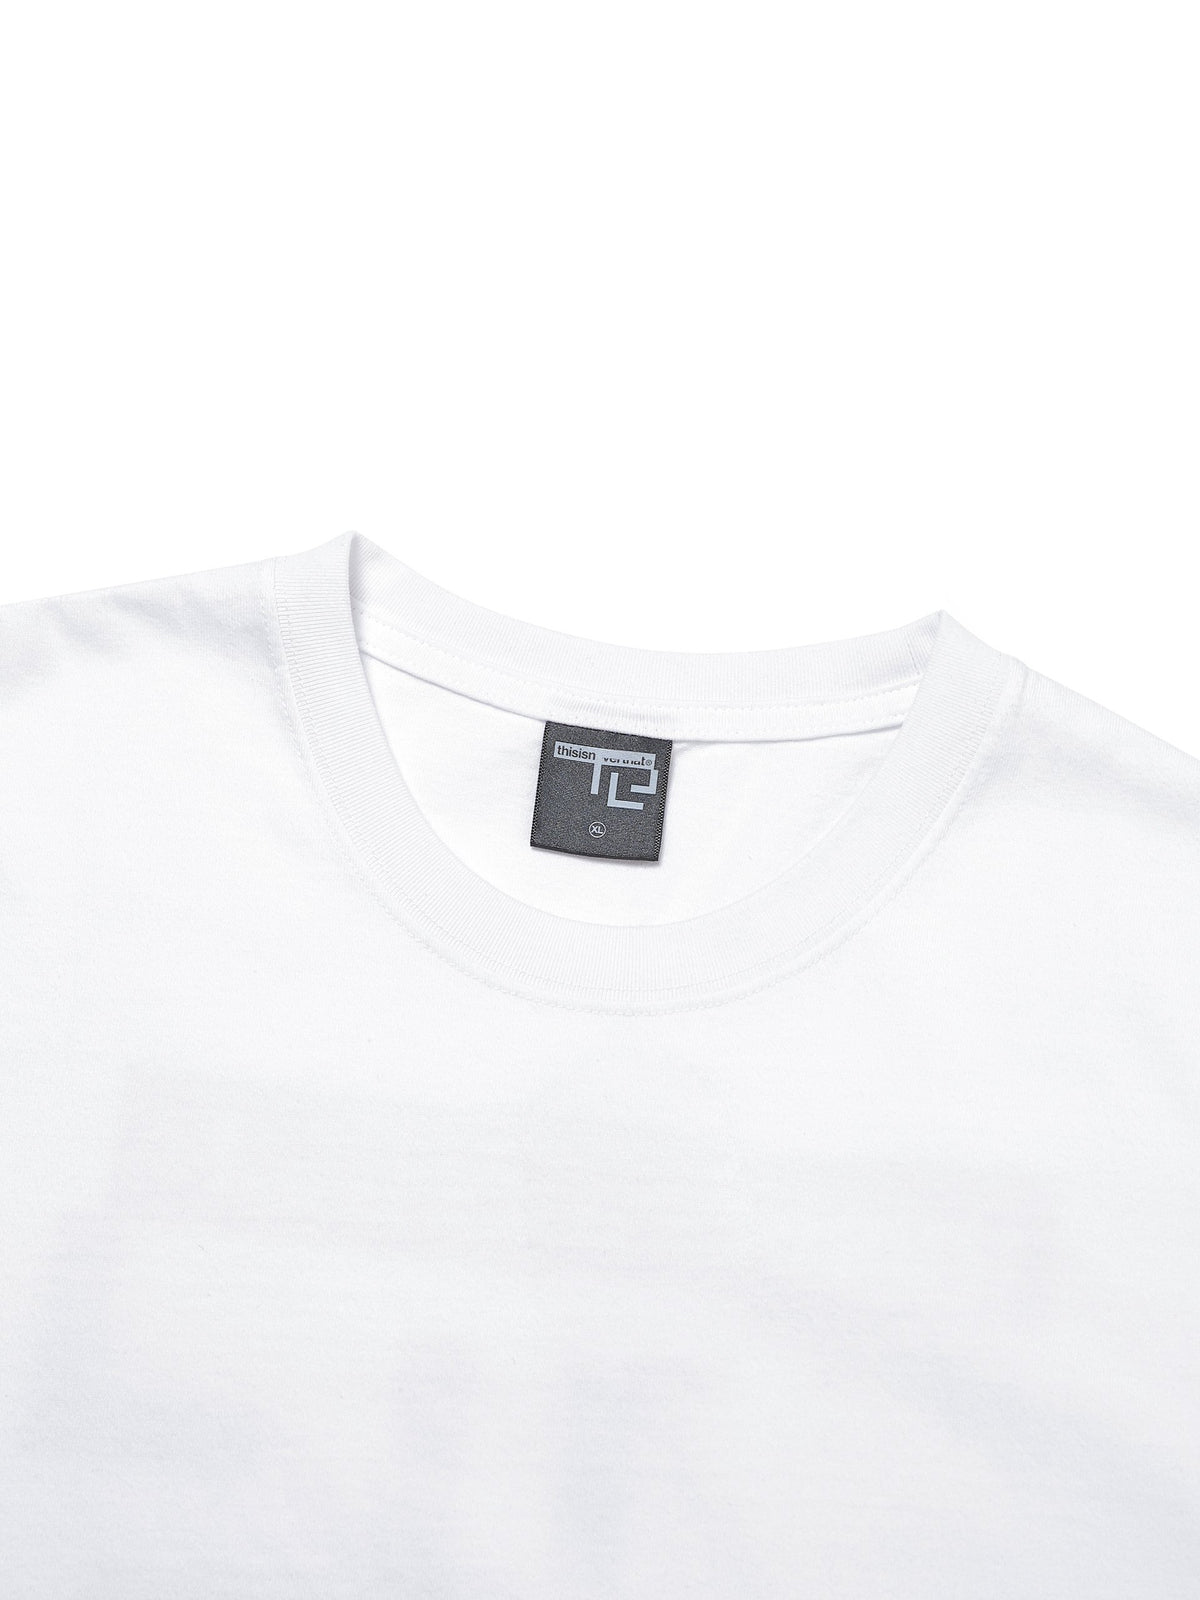 TNT x RAMIDUS Tee T-Shirt 